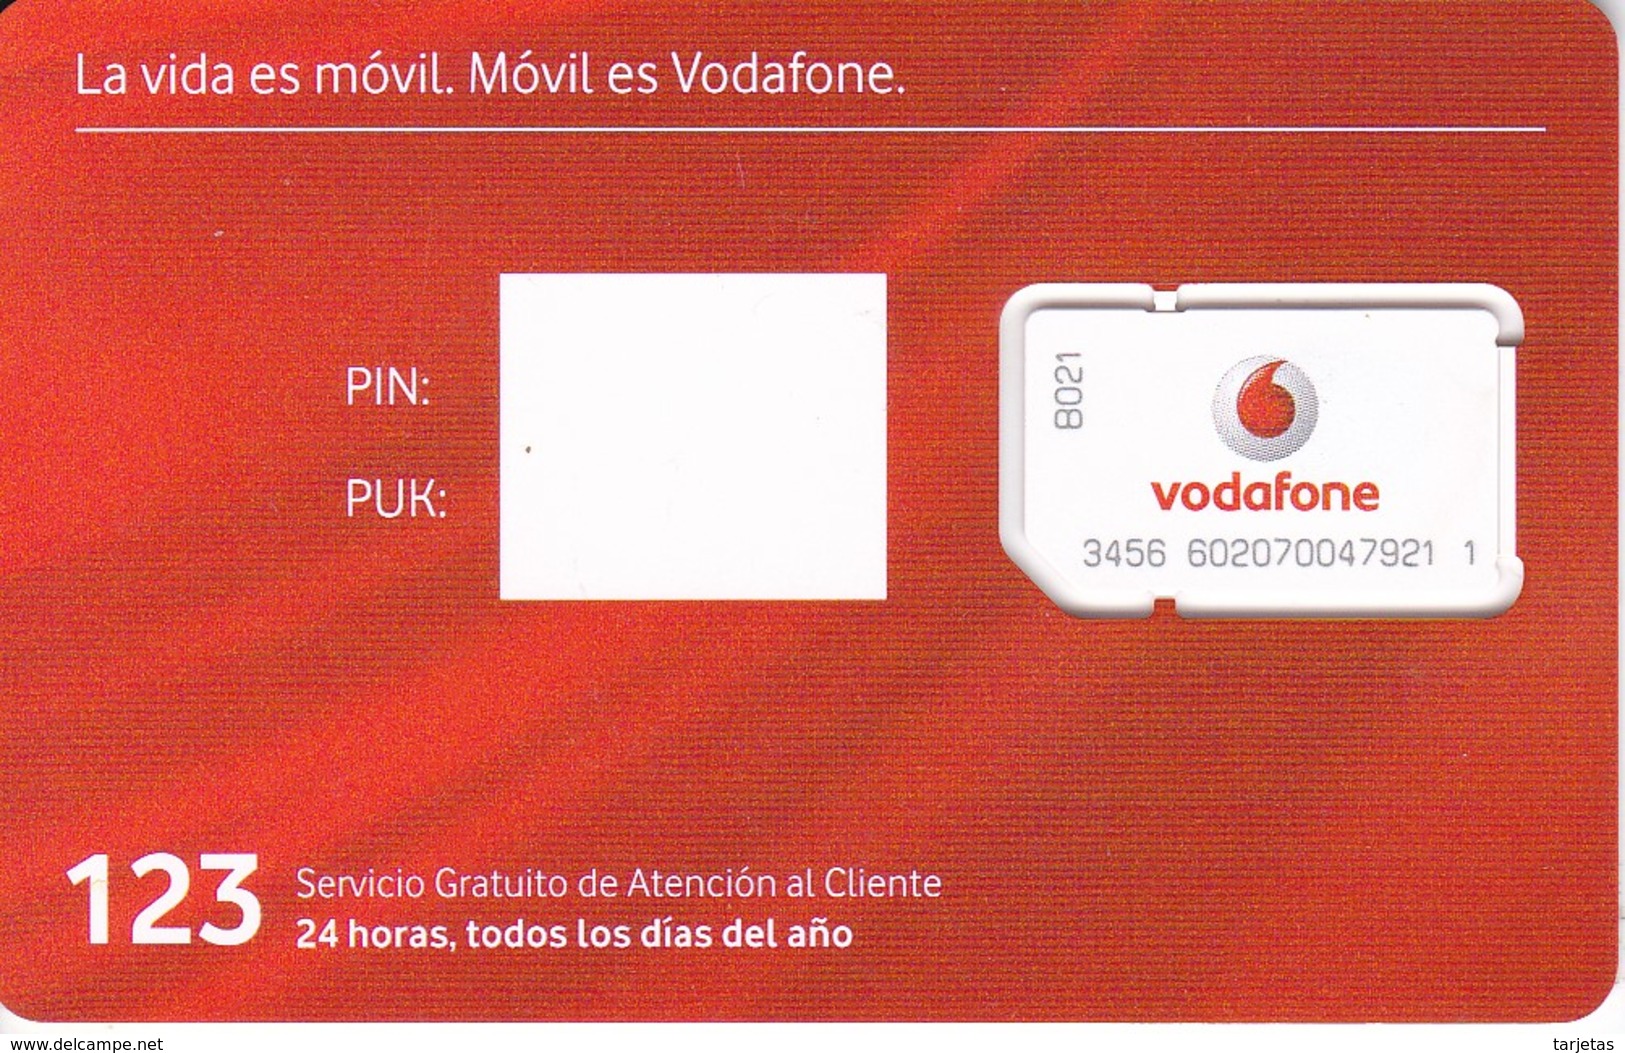 TARJETA DE ESPAÑA DE GSM-SIM  DE VODAFONE 64K (NUEVA-MINT) - Vodafone